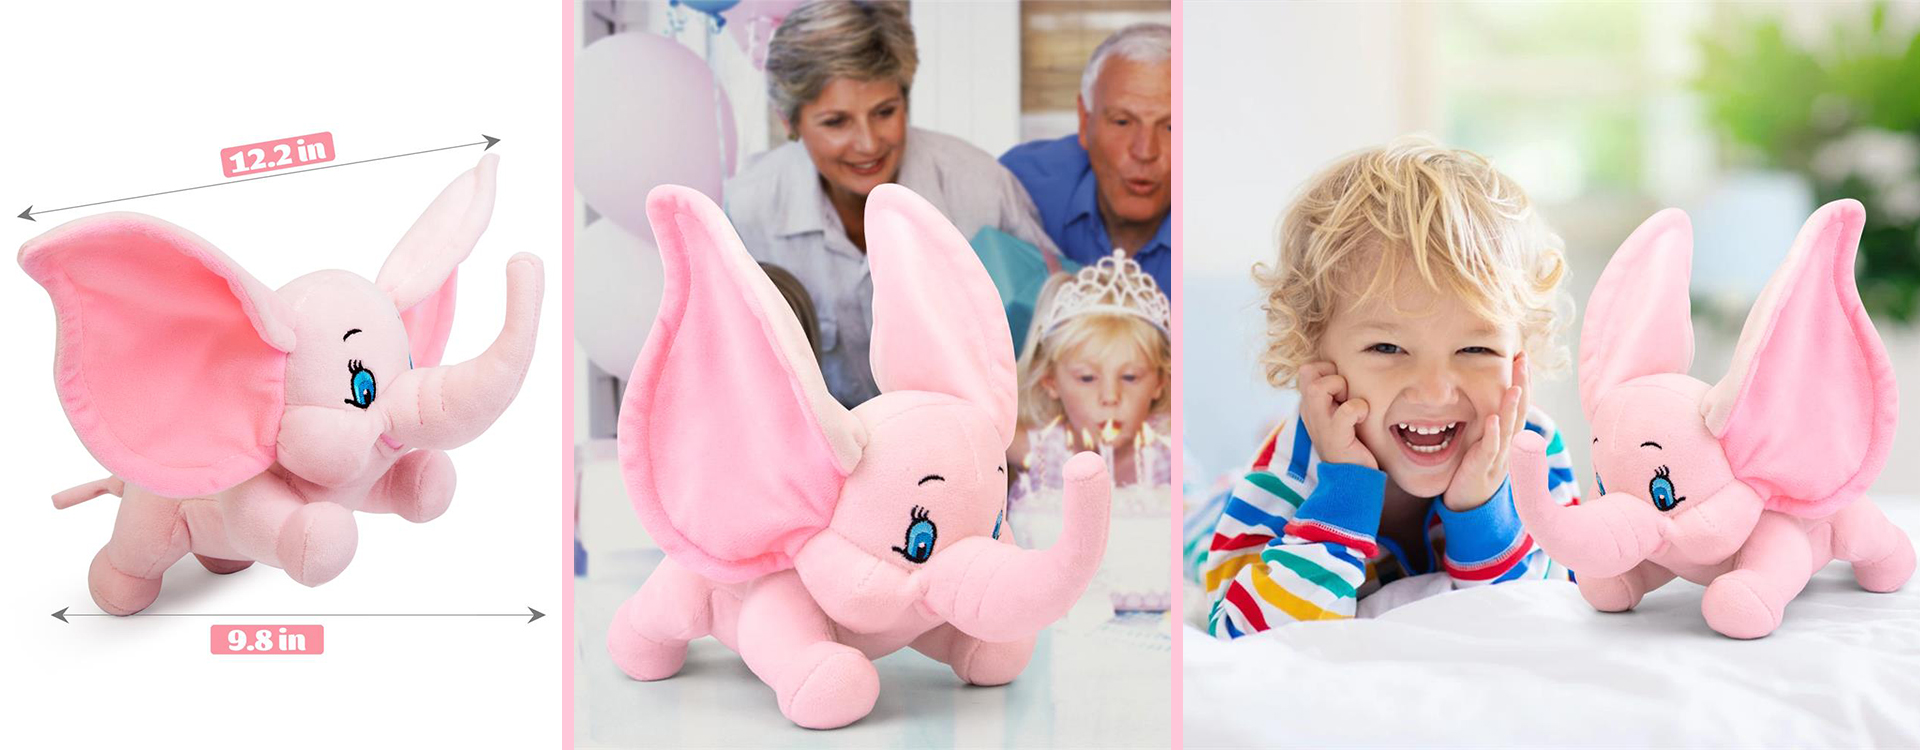 Customer Buying Pink Stuffed Elephant Use Experience